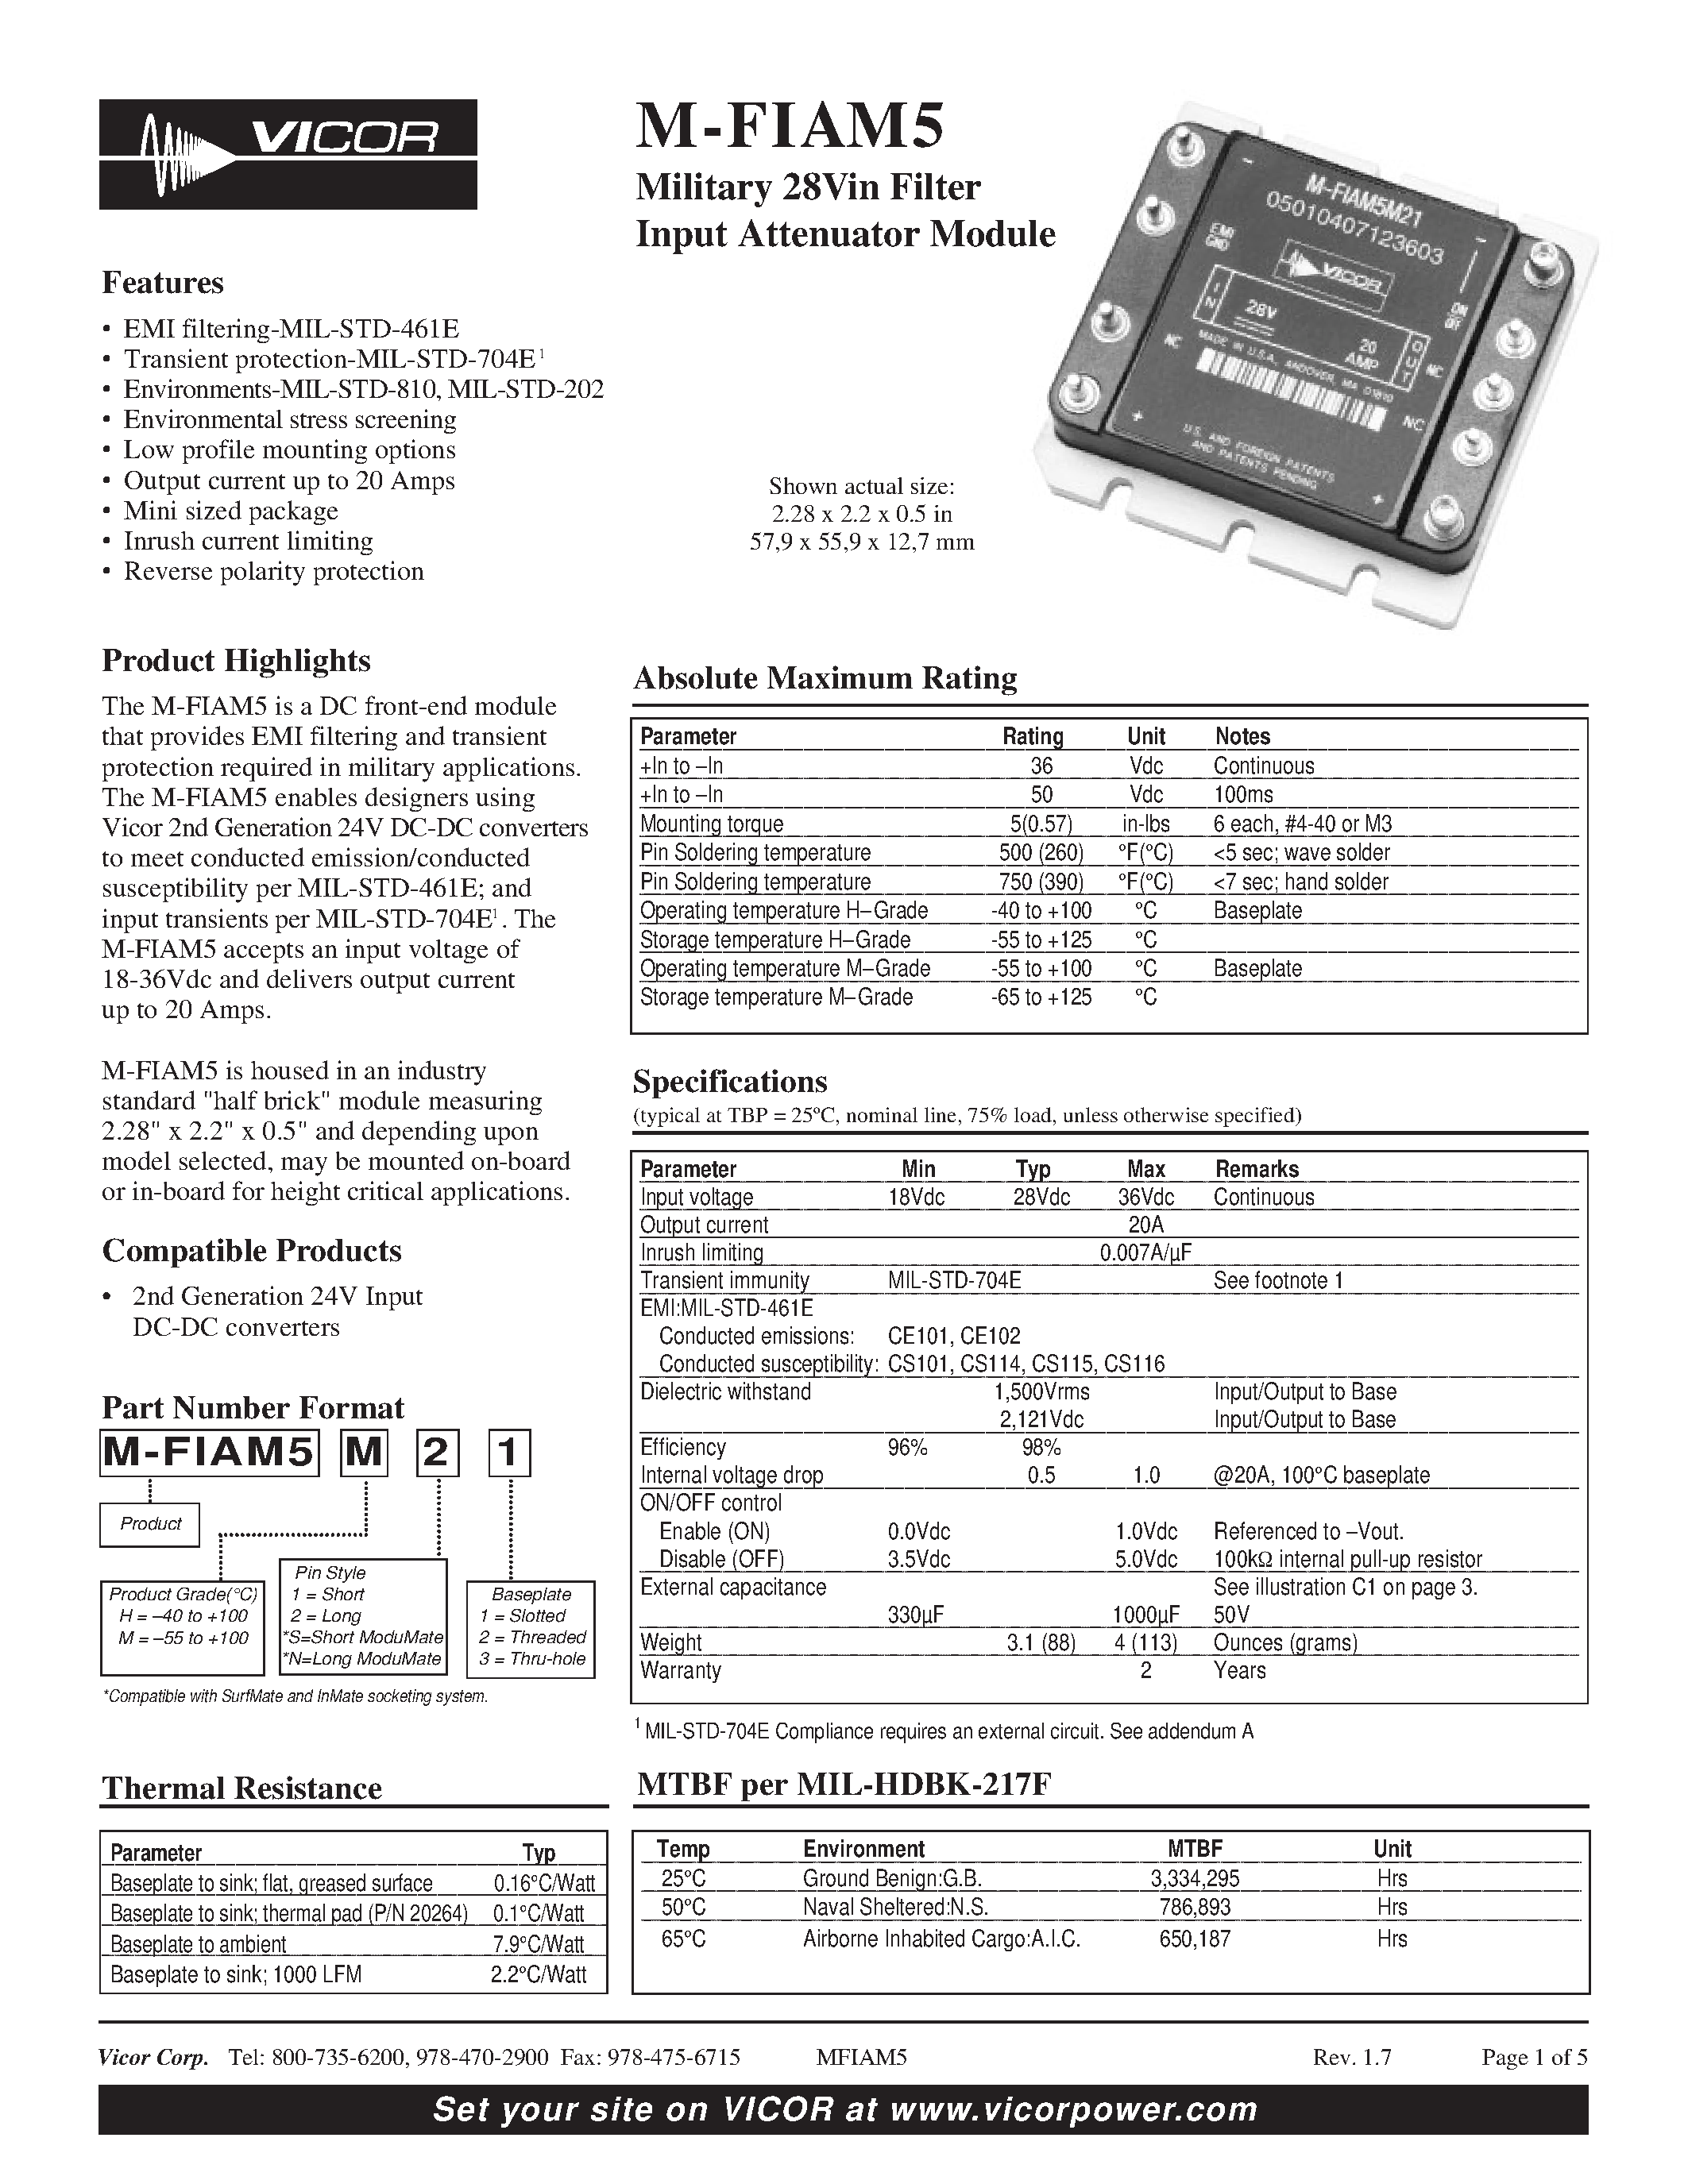 Datasheet M-FIAM5M23 - Military 28Vin Filter Input Attenuator Module page 1